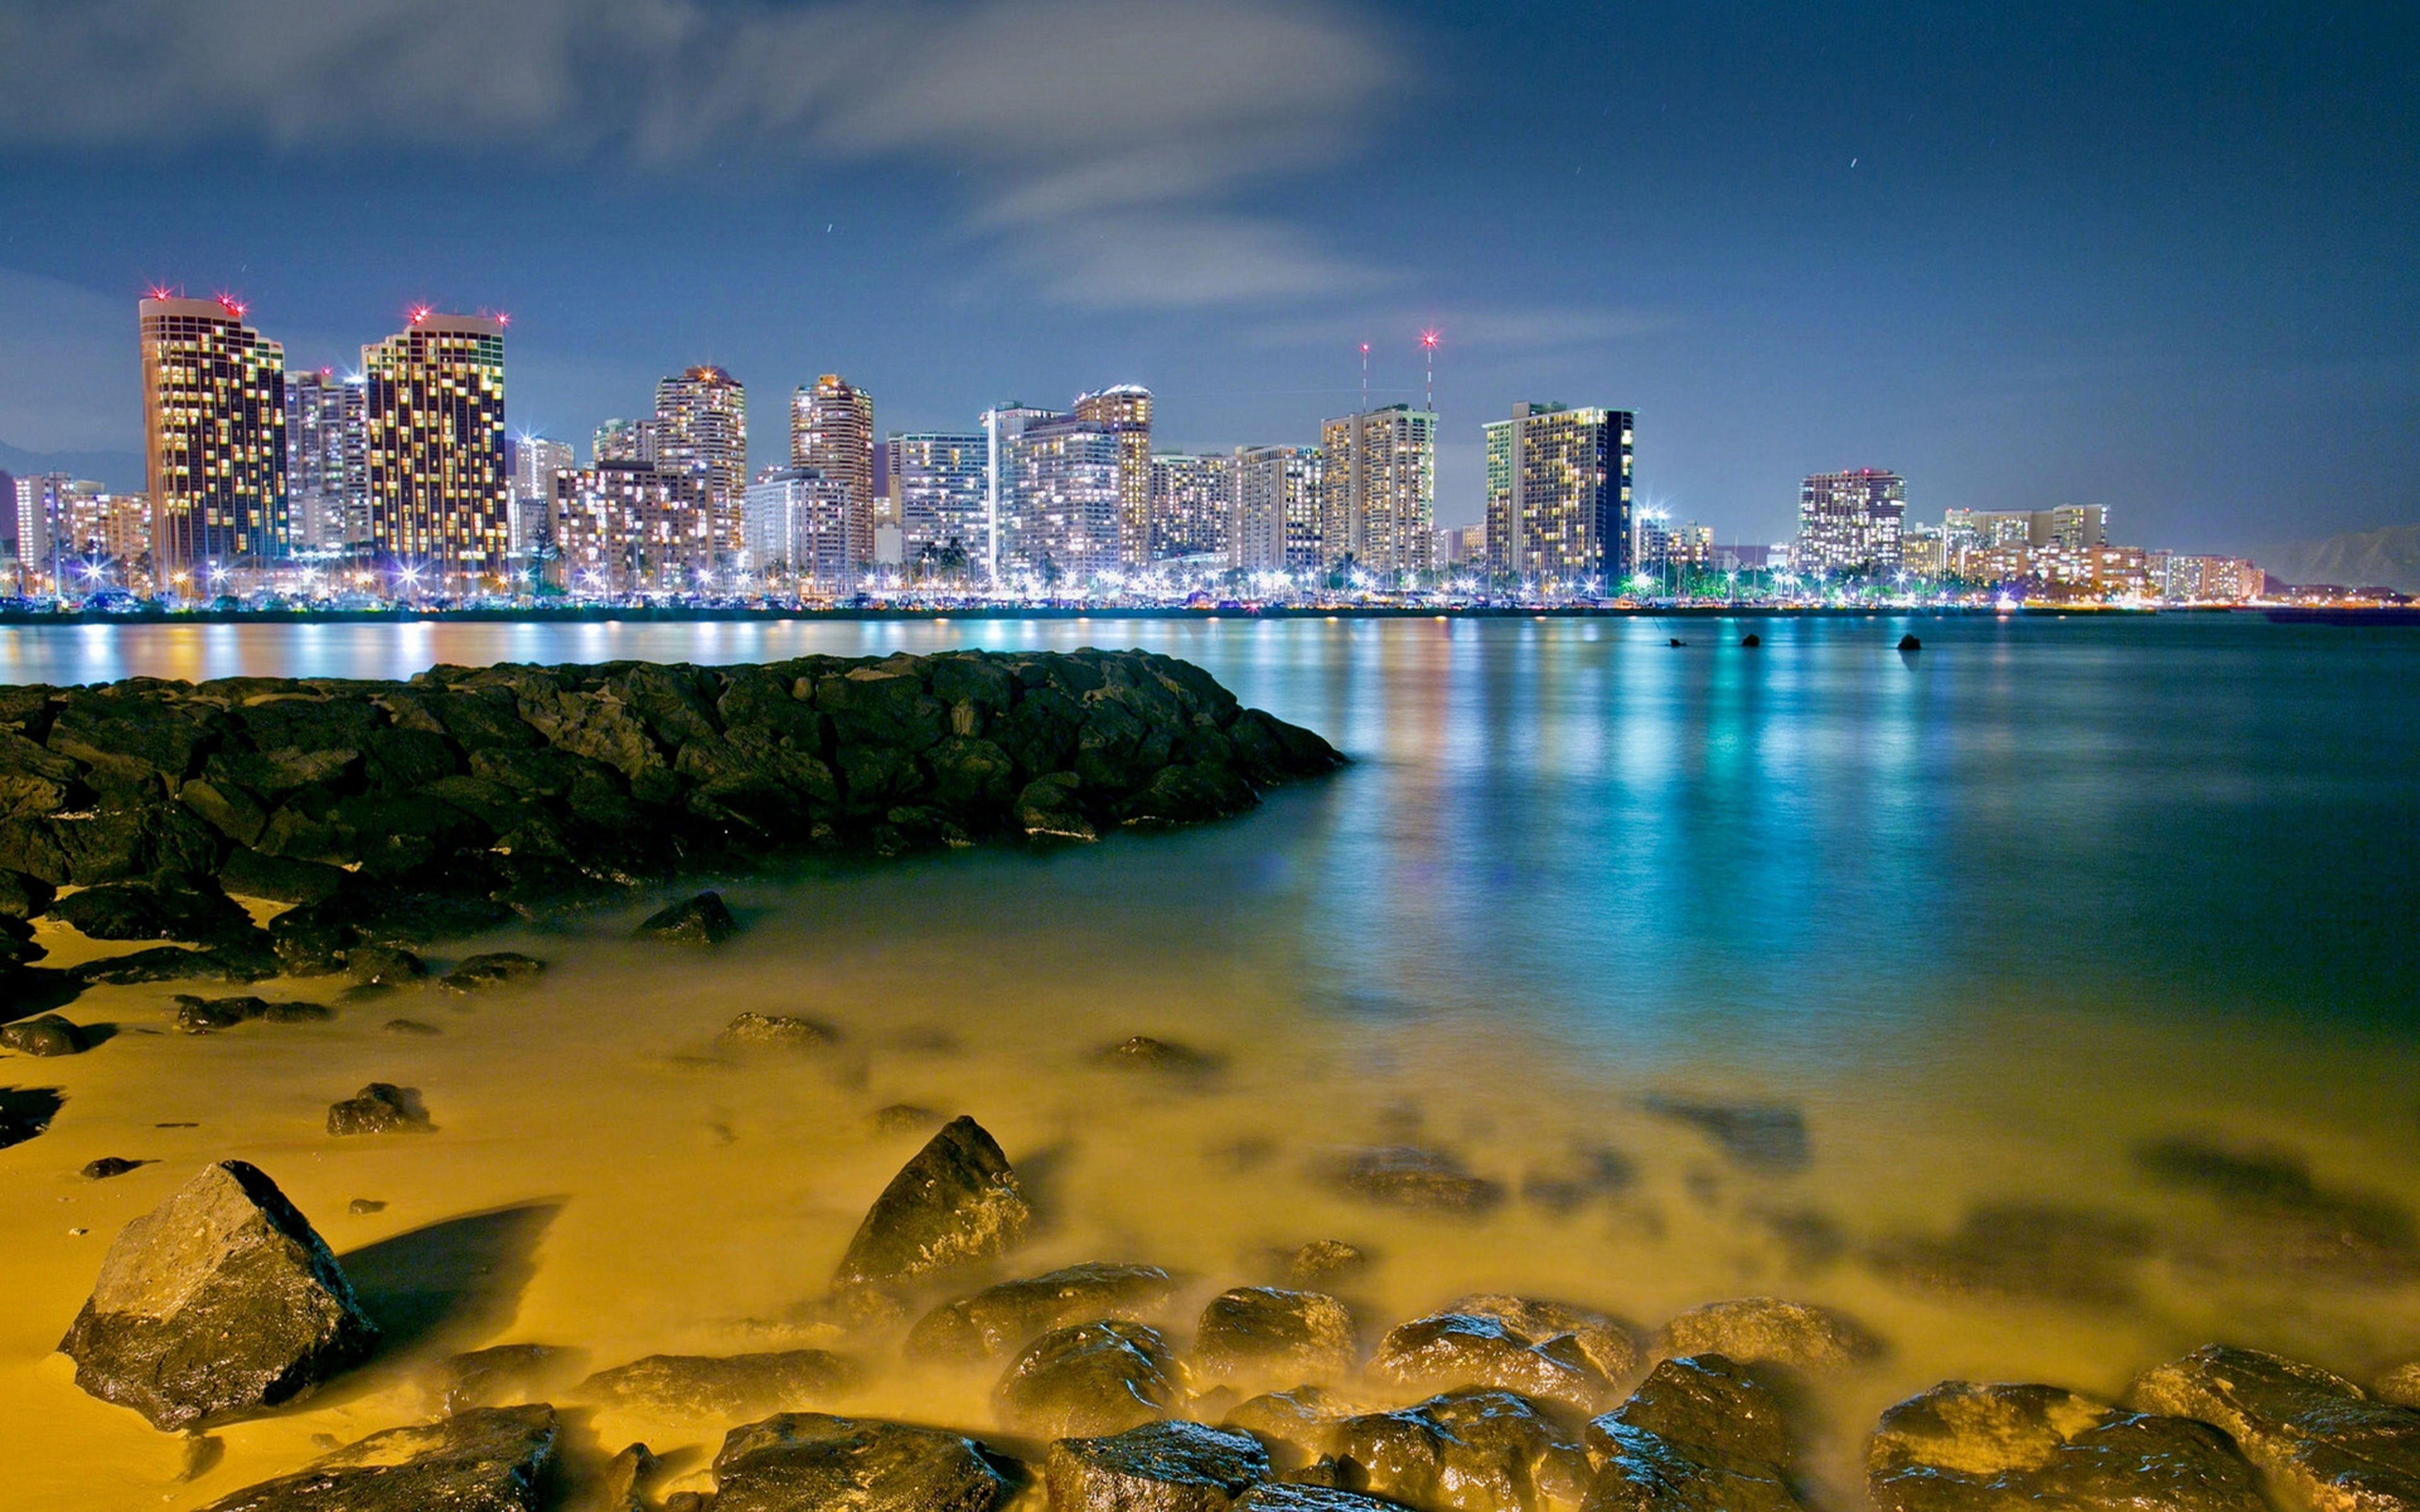 City honolulu hawaii evening night lighting sea beach stones desktop wallpaper hd x